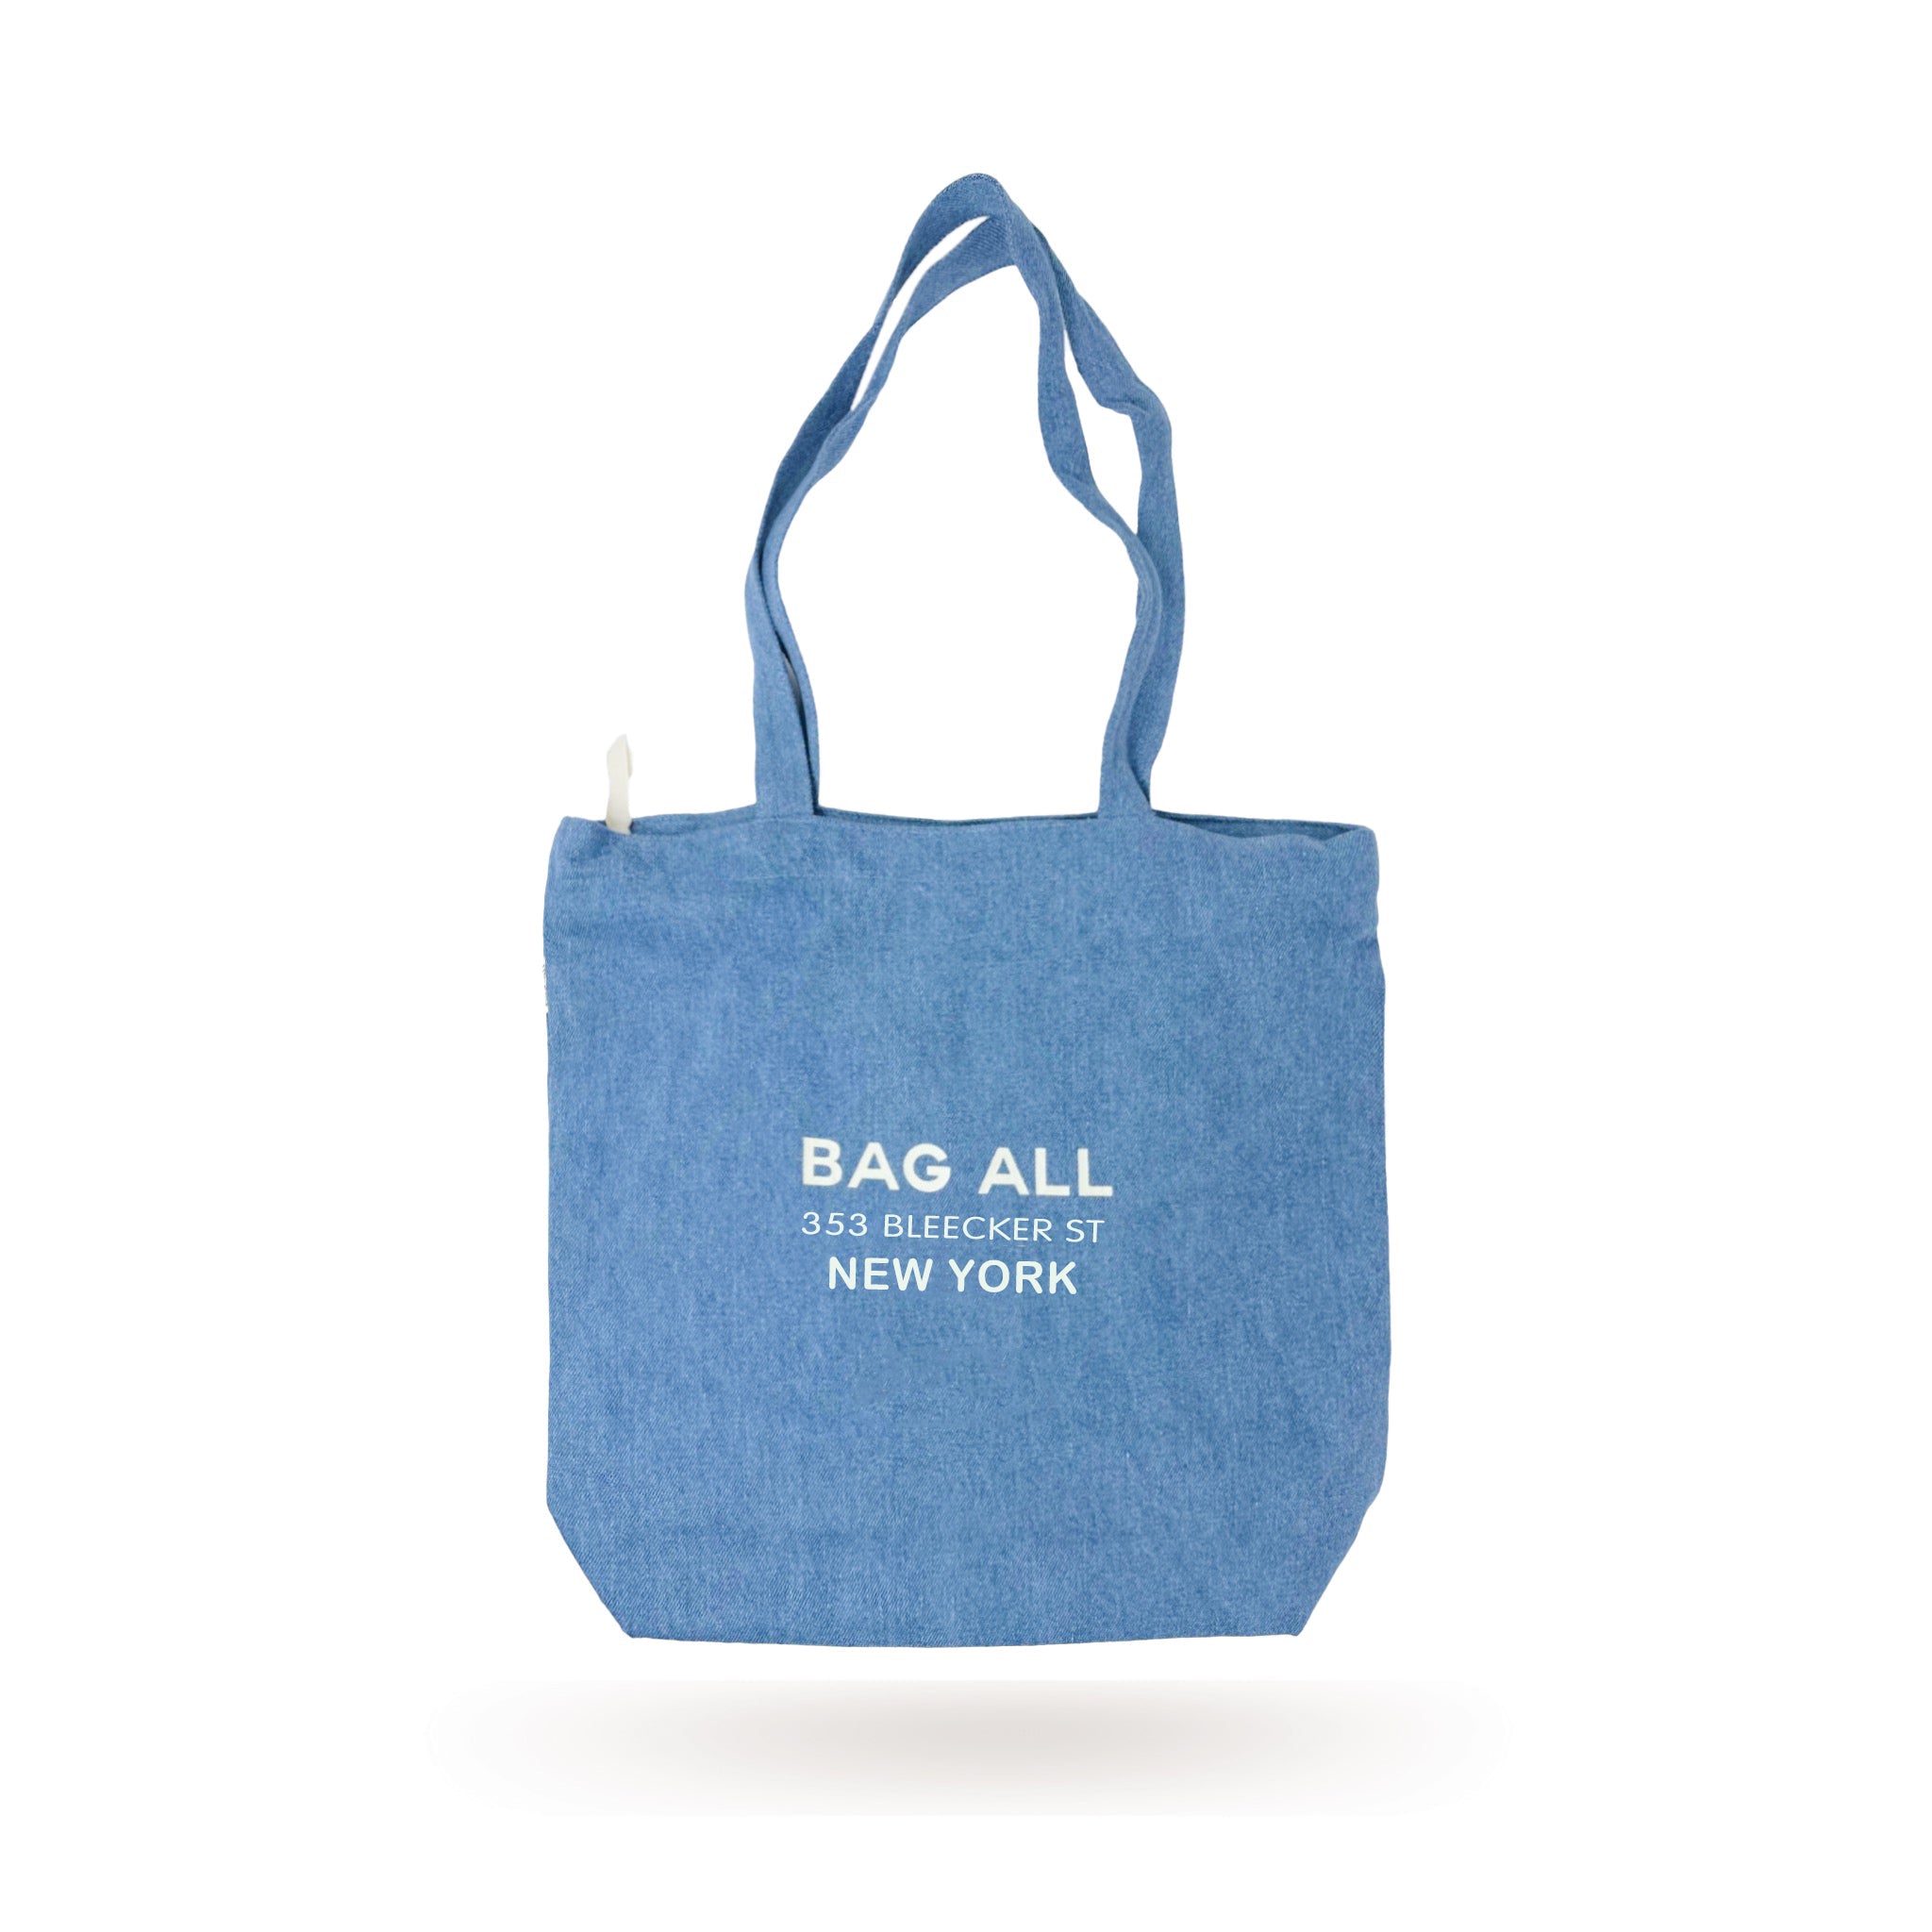 Bag Shop NYC